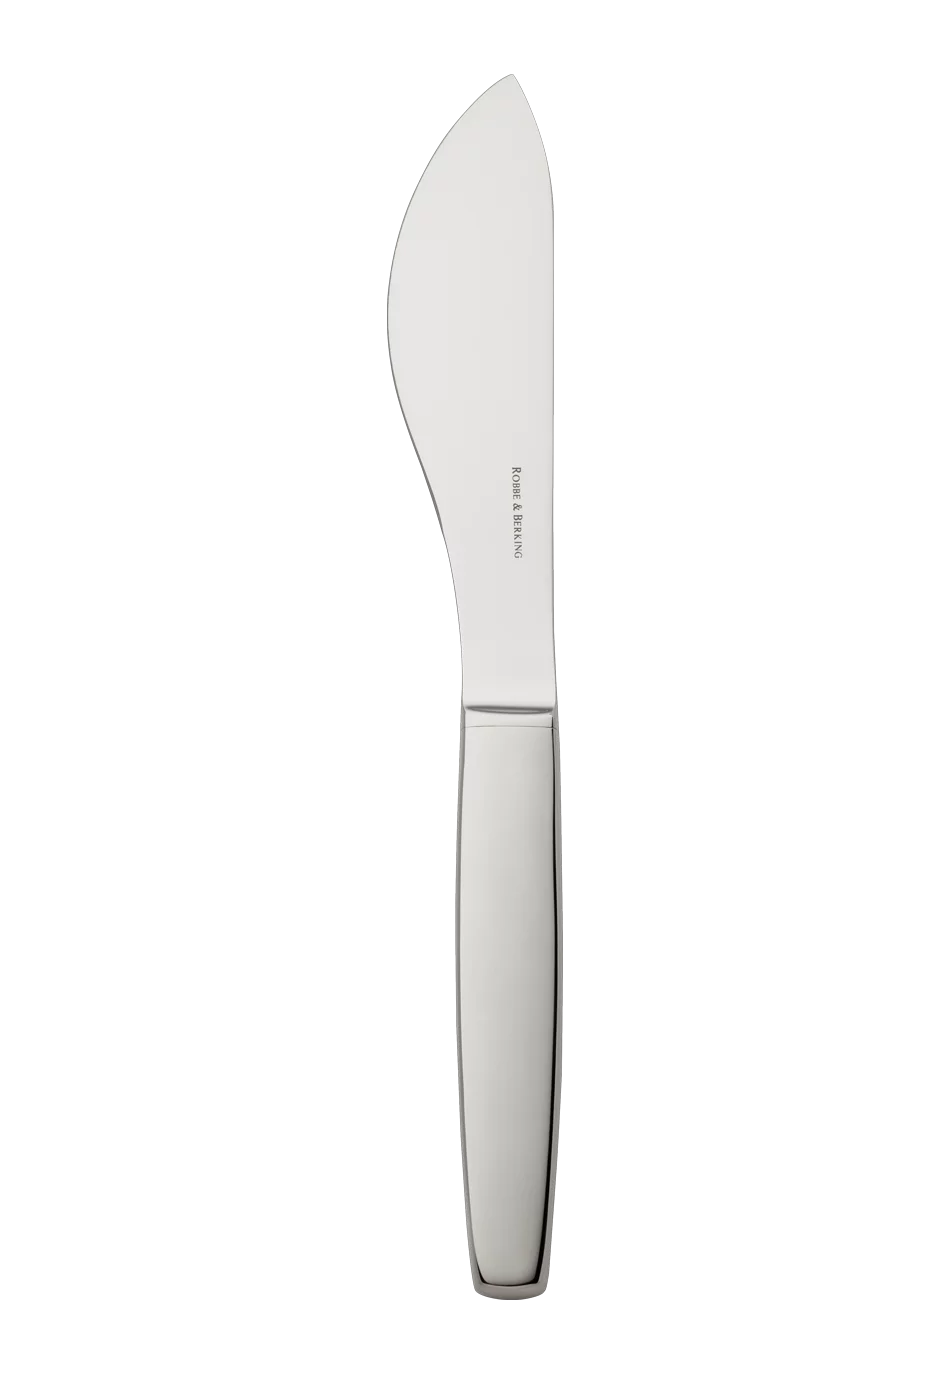 Pax Tart Knife (18/8 stainless steel)